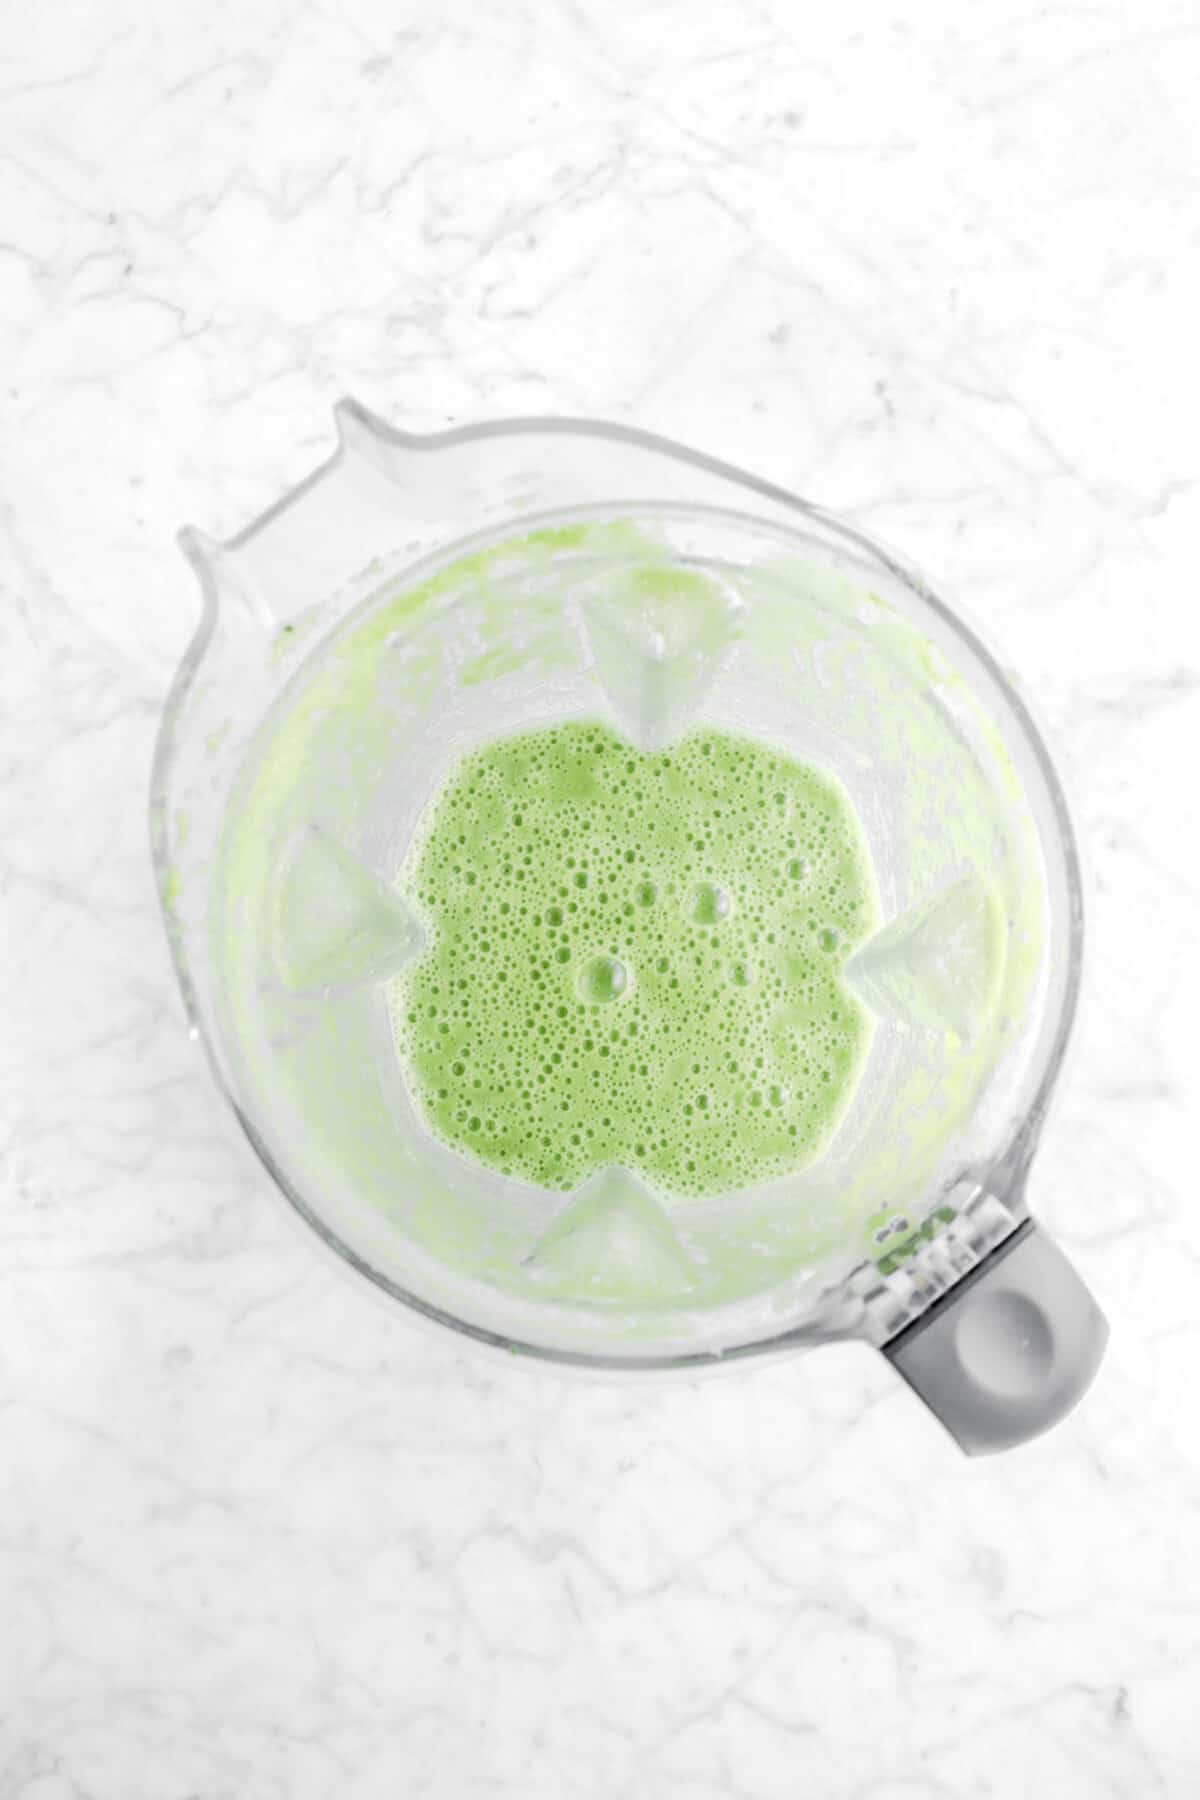 green juice in blender